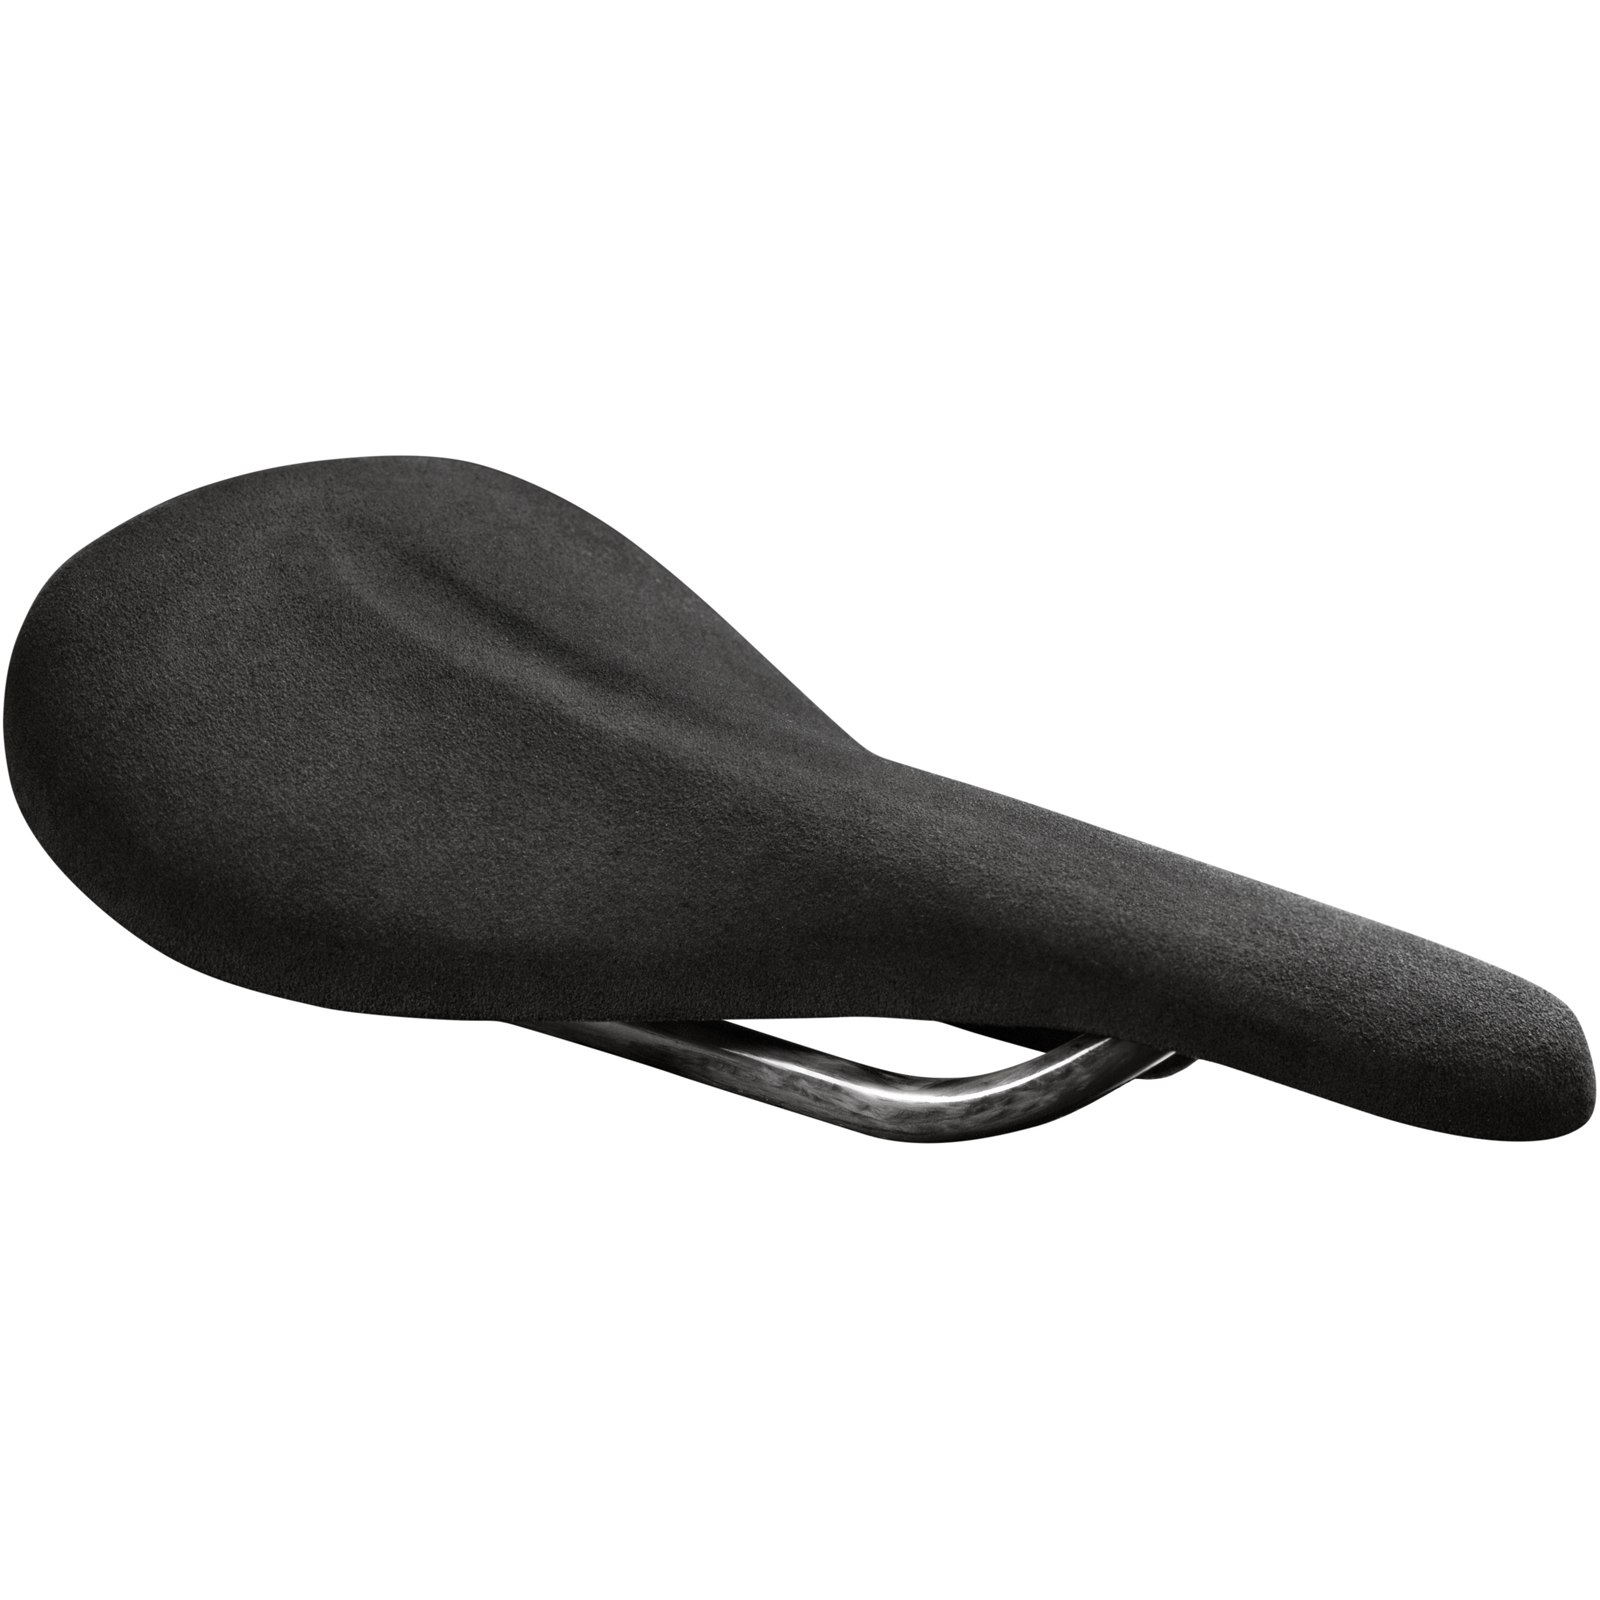 Image of Beast Components Grip Carbon Saddle - Alcantara - 145mm, black